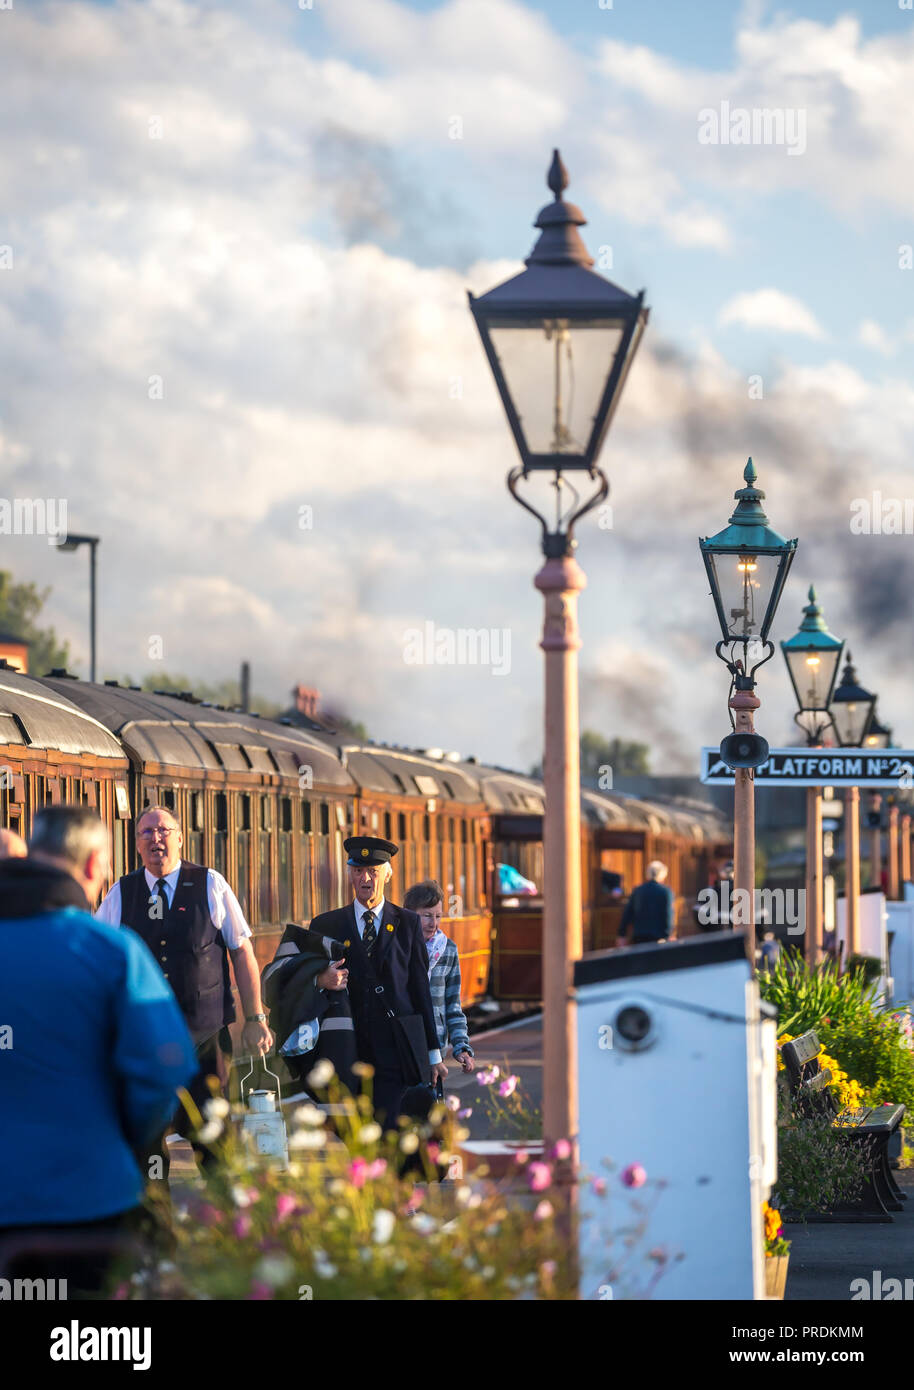 Busy platform scene at Severn Valley Railway's Kidderminster station.  vintage heritage railways. Stock Photo